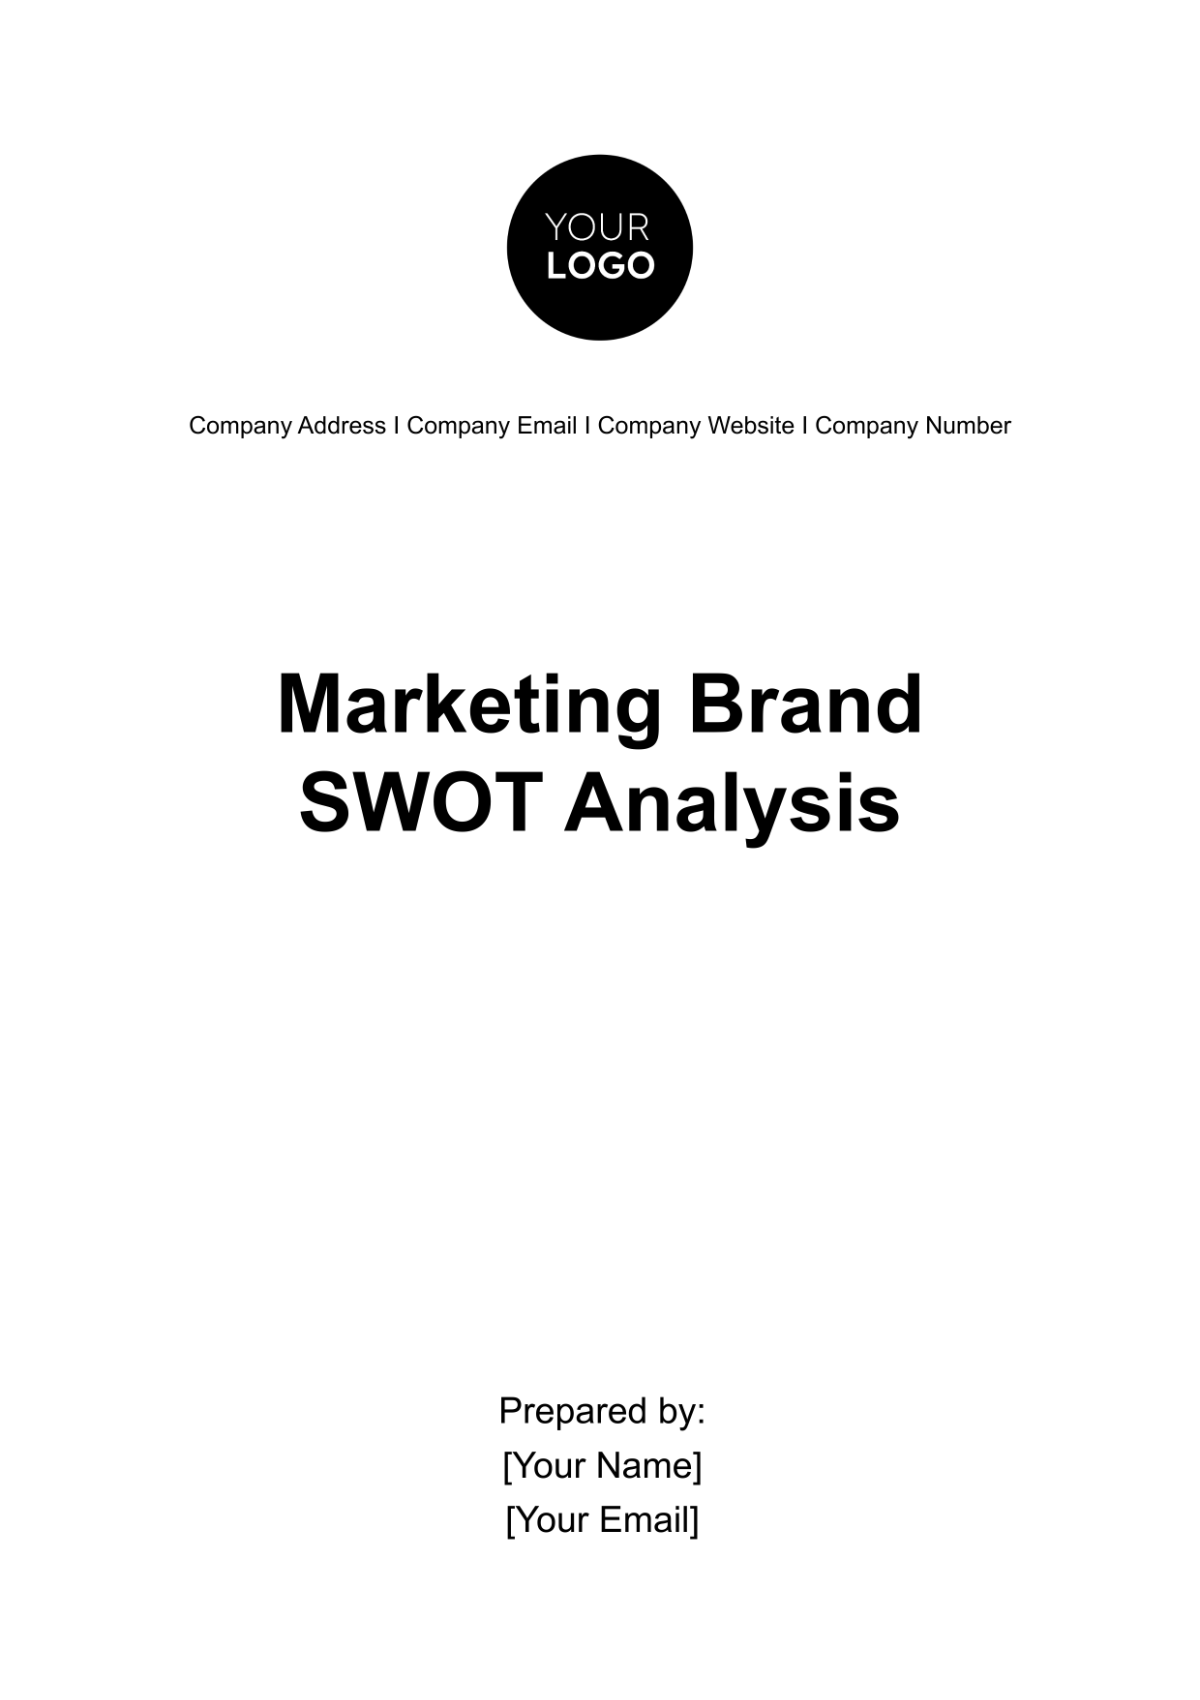 Marketing Brand SWOT Analysis Template